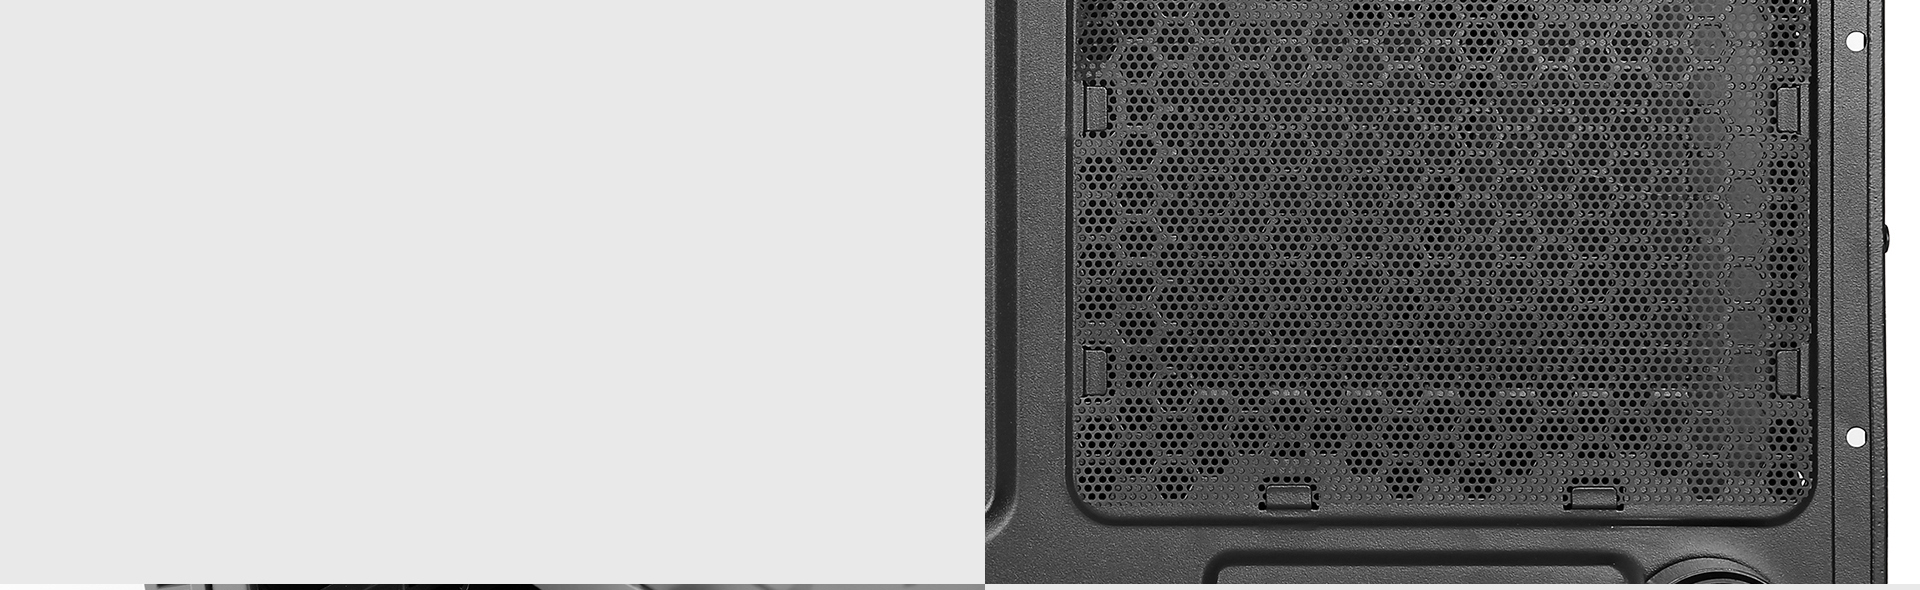 Closeup shot of the Antec Case's bottom dust filter